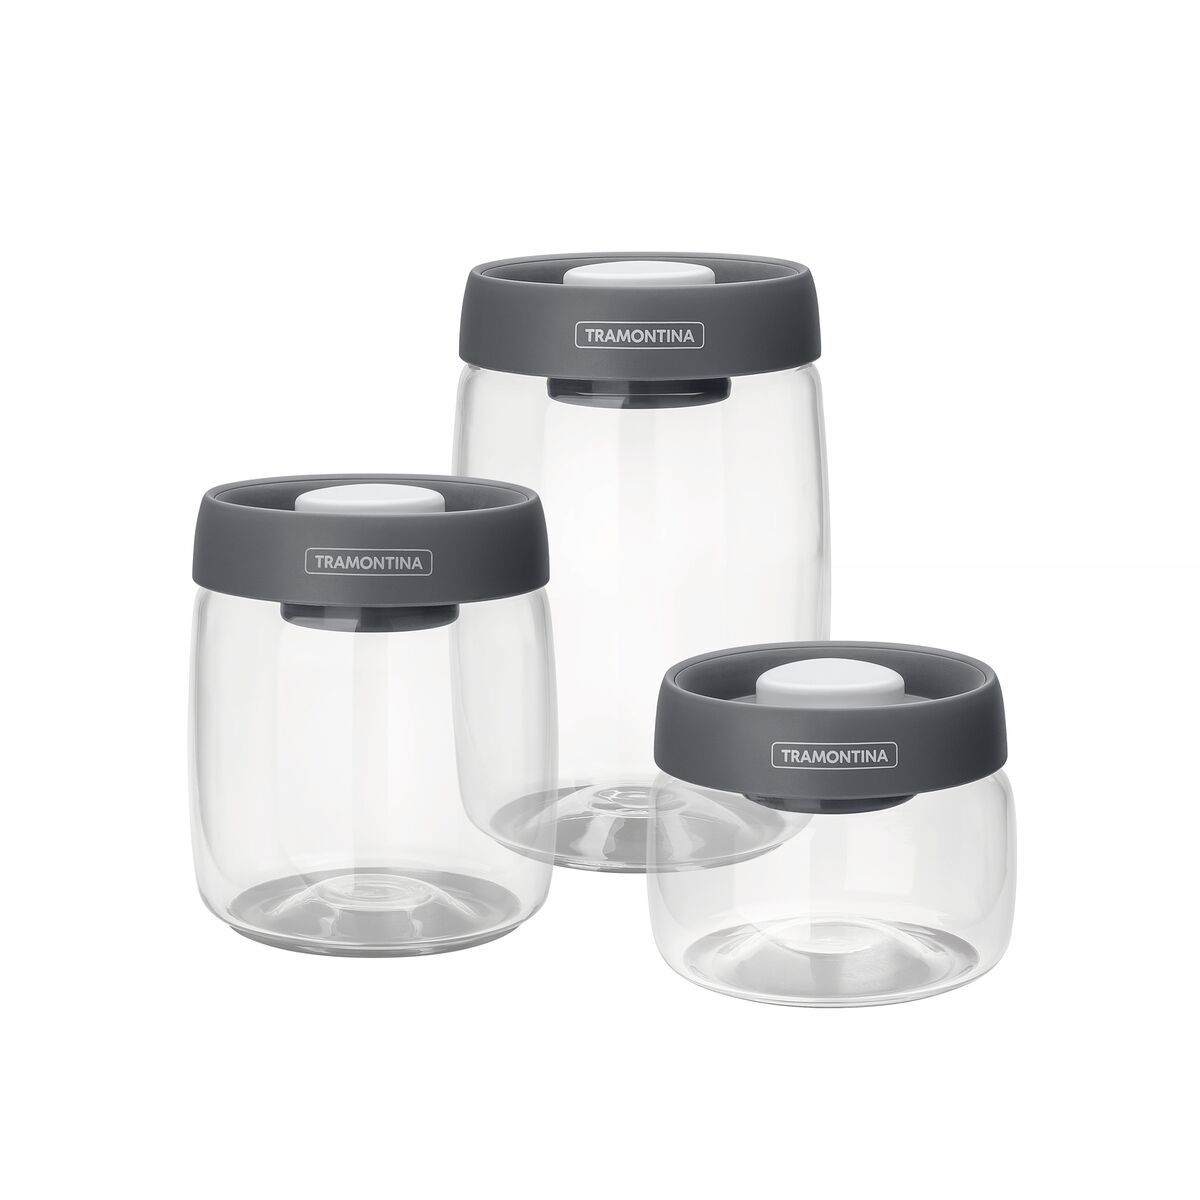 Tramontina Purezza glass container set with vacuum plastic lids, 3 pc set